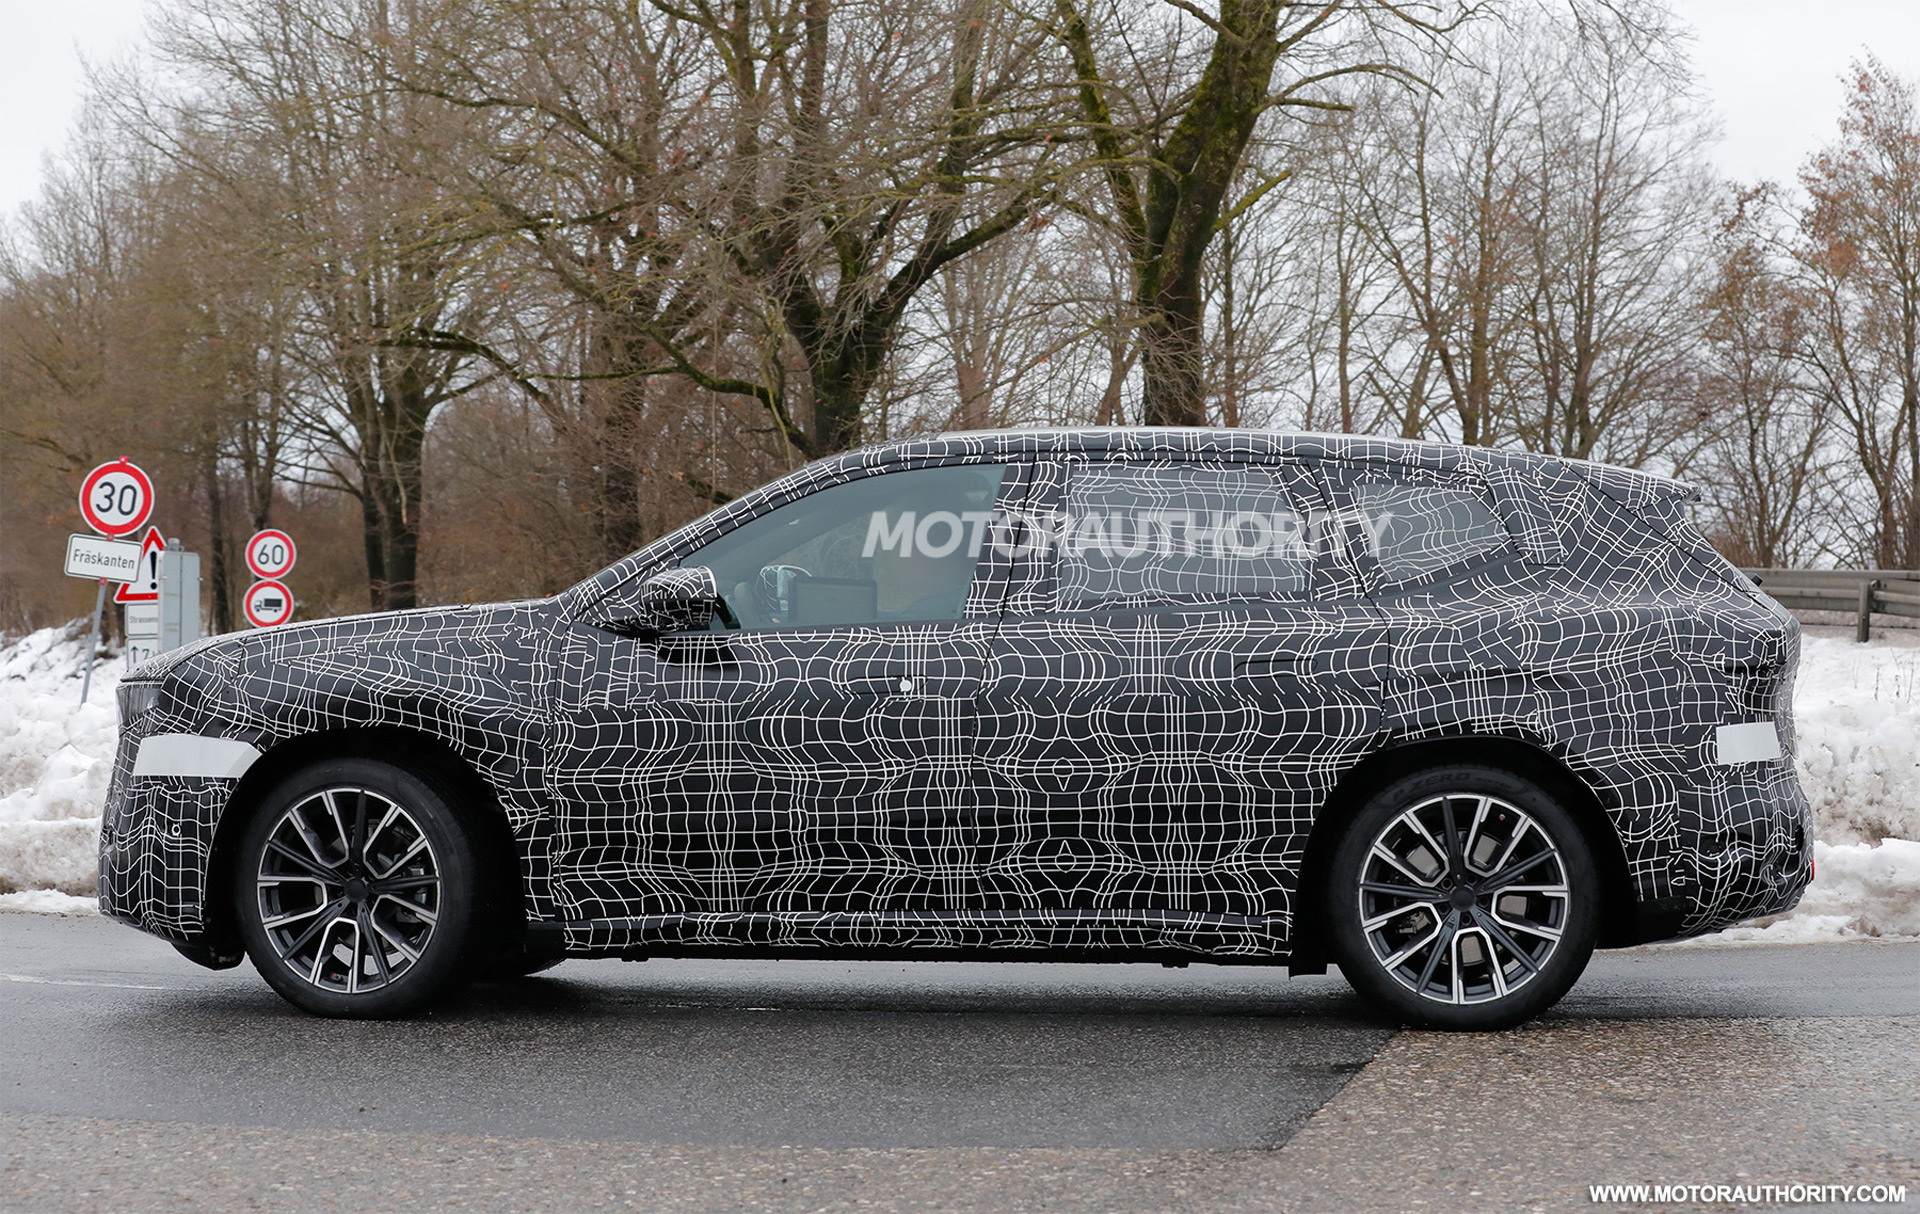 BMW Neue Klasse SUV, Rodin Fzero: Car News Headlines Auto Recent